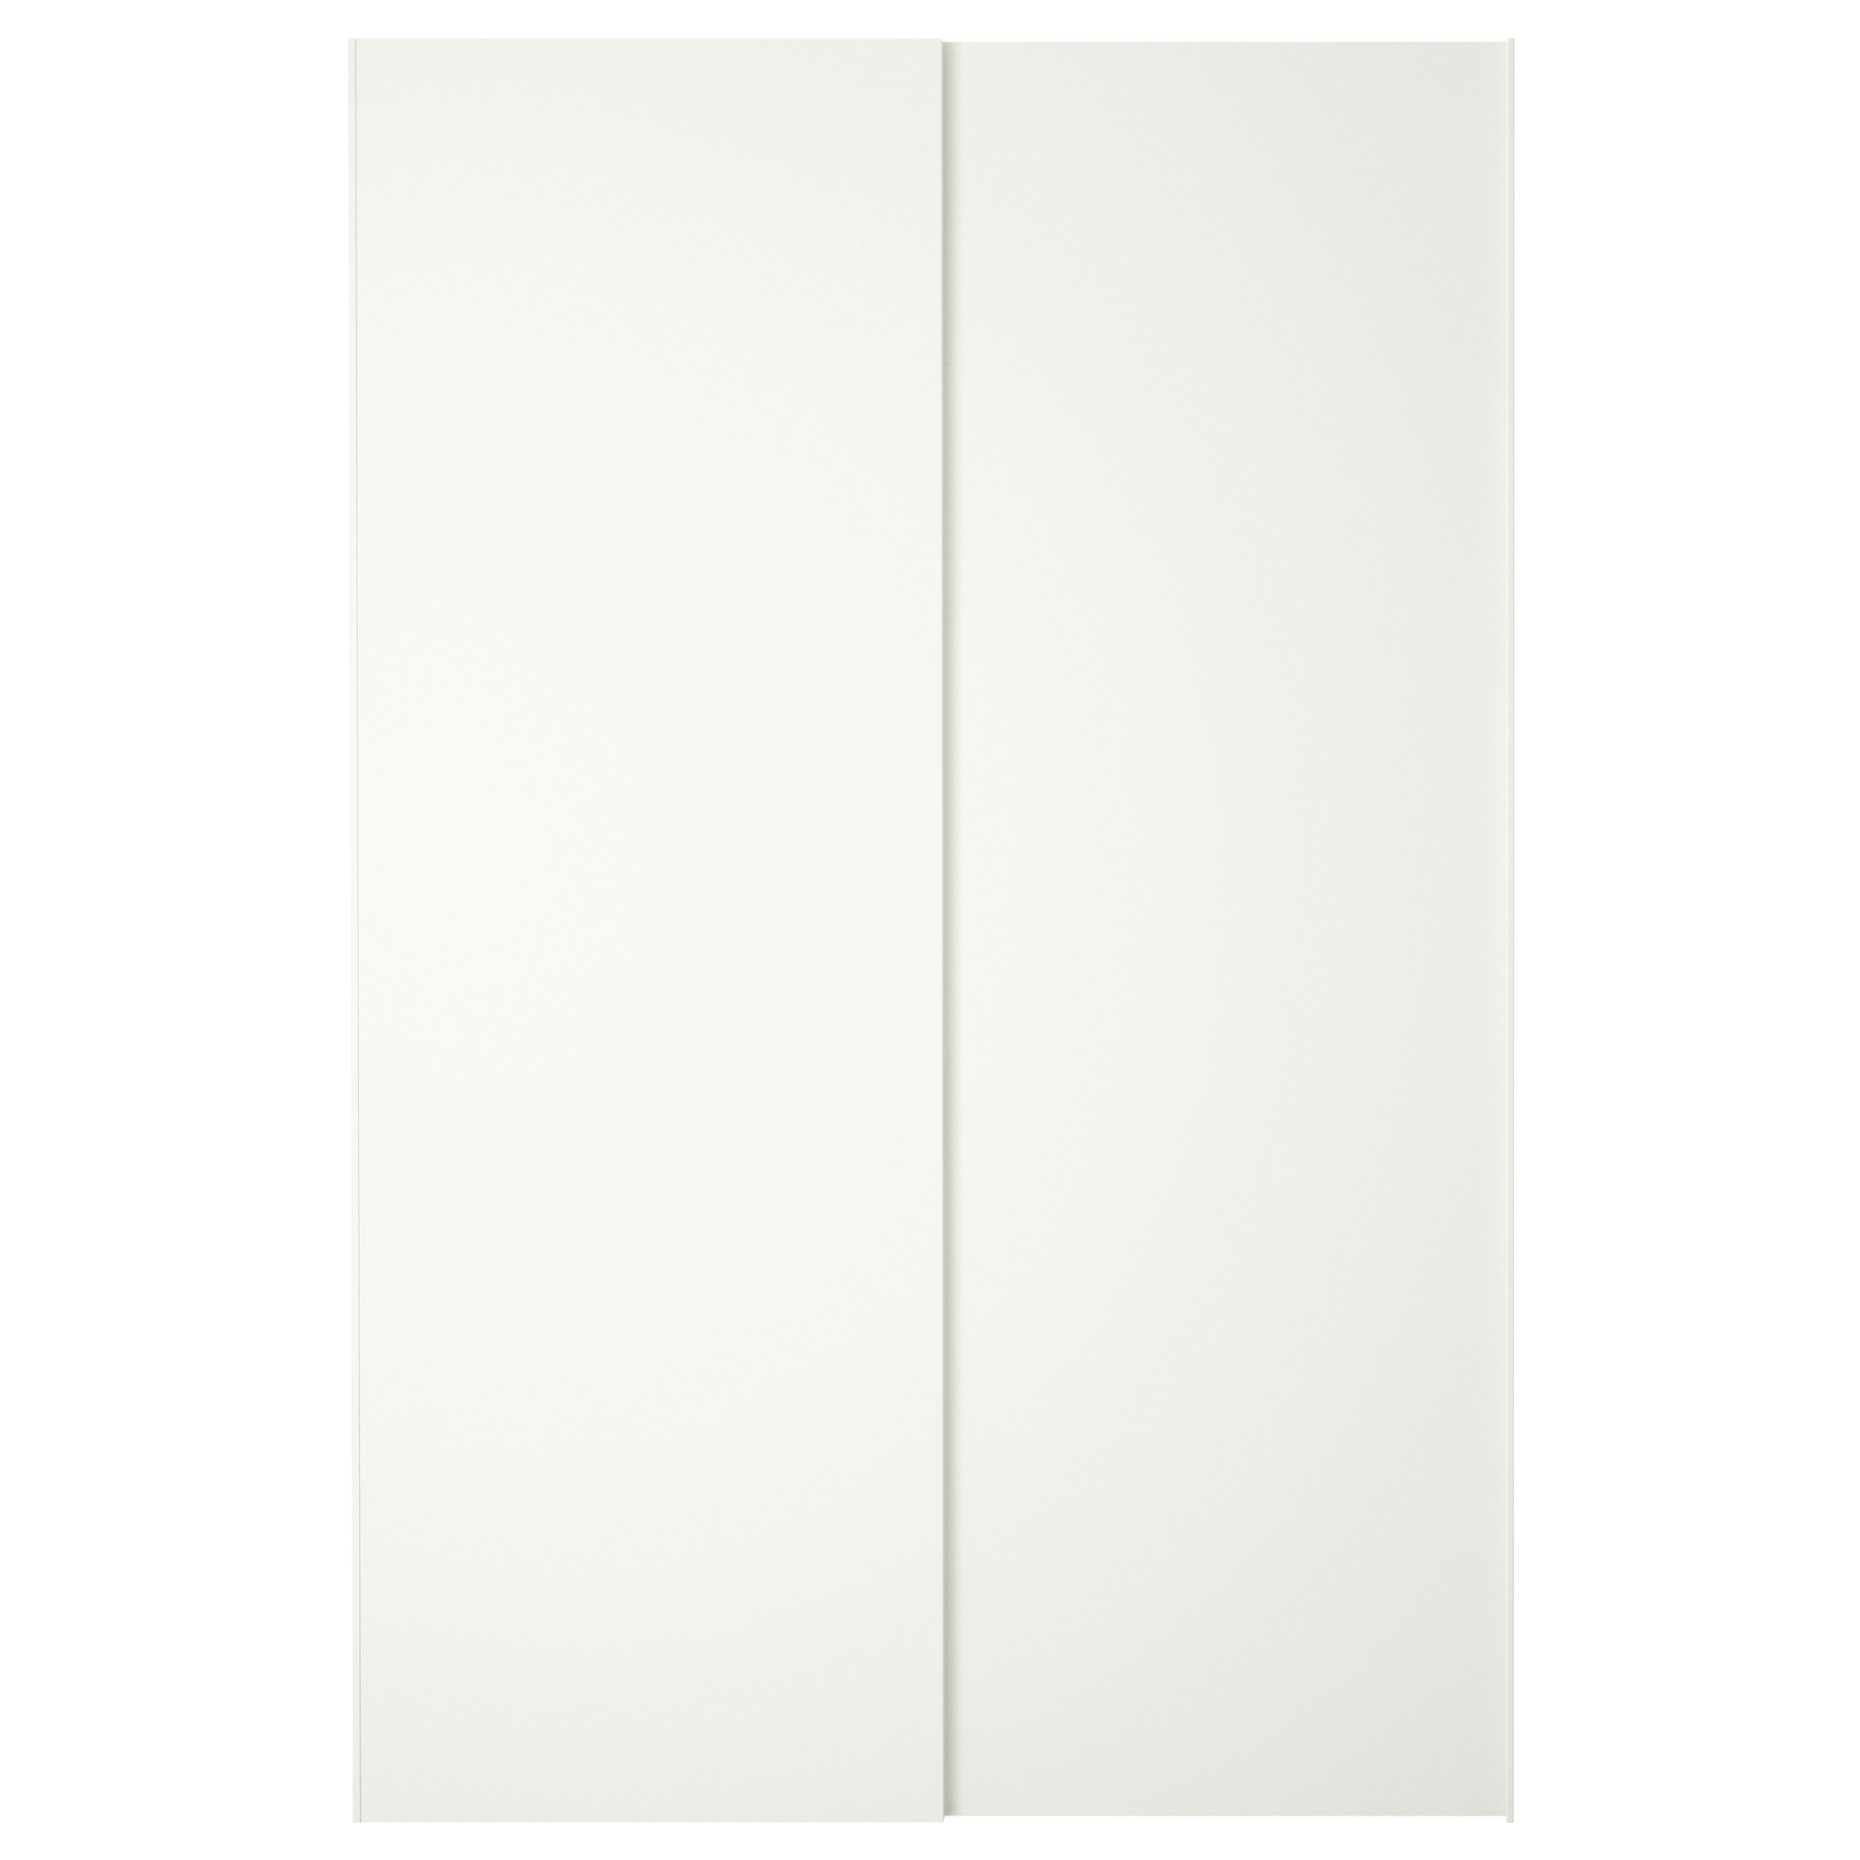 HASVIK, συρόμενη πόρτα, 2 τεμ. 150x236 cm, 905.215.38